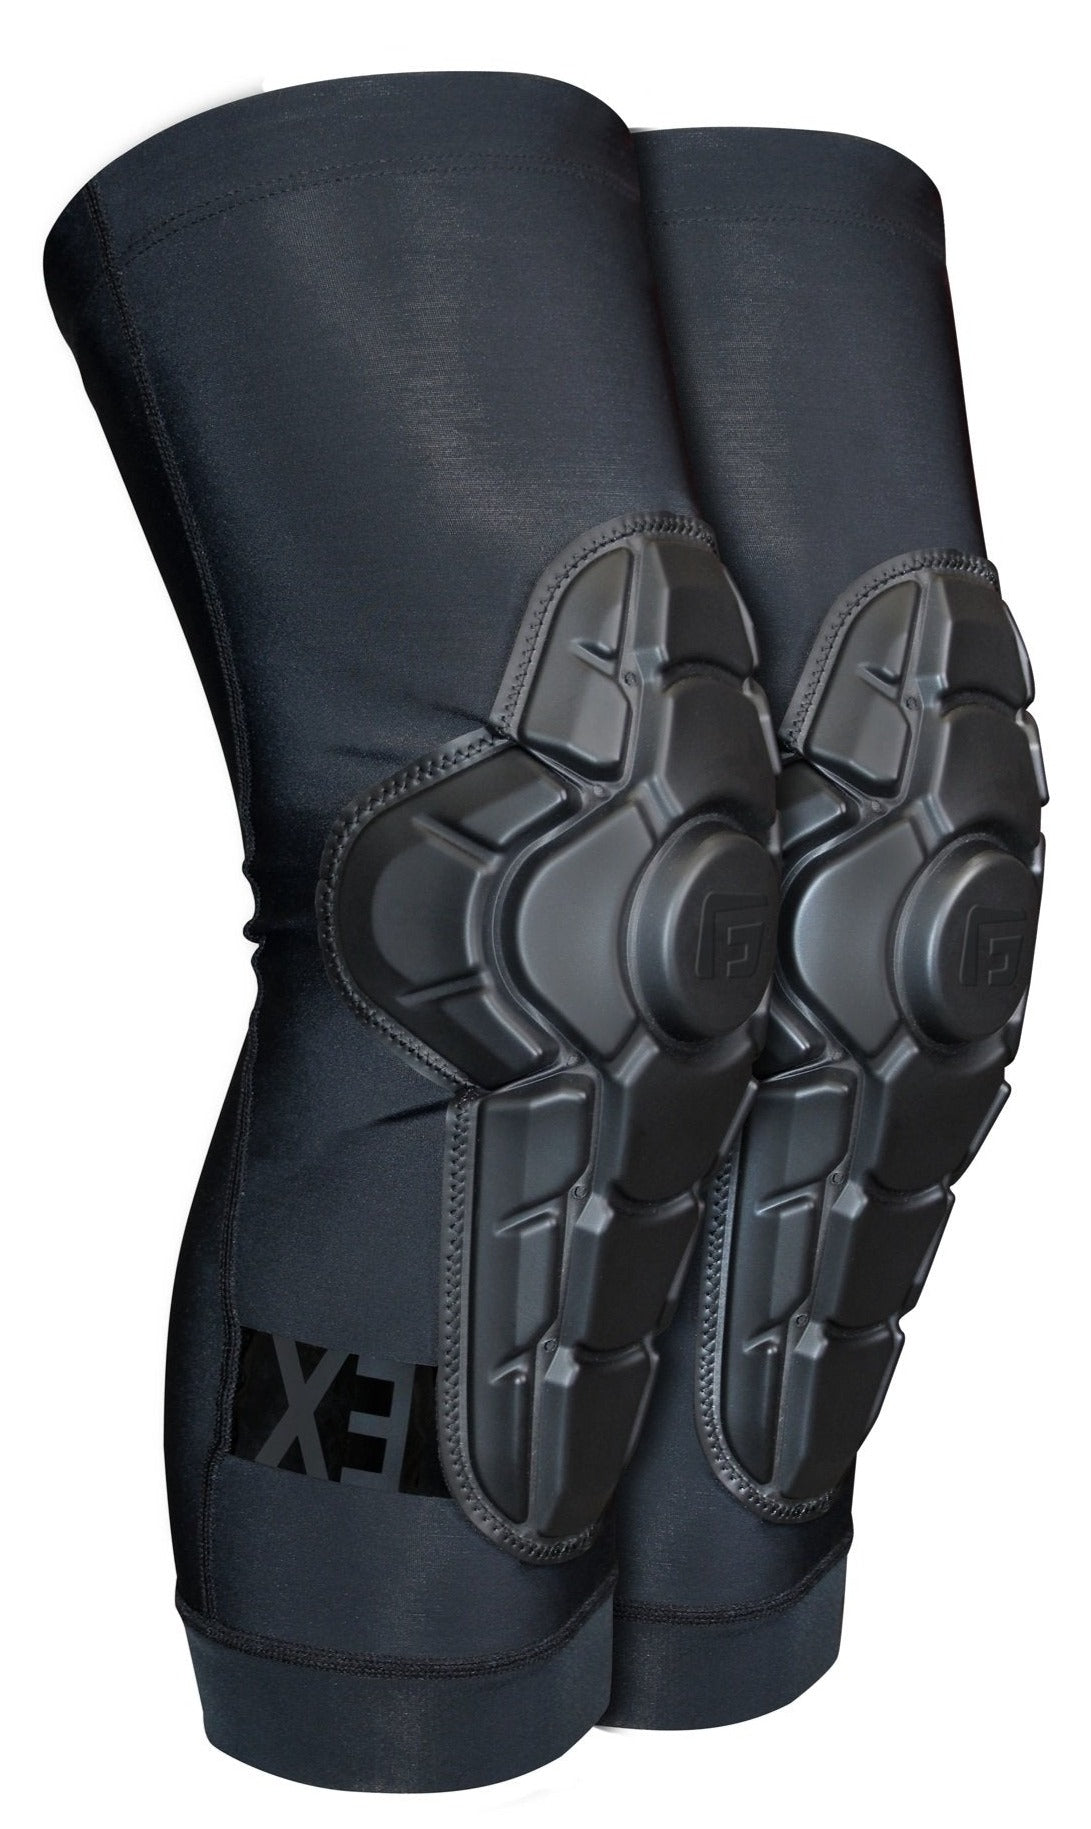 Photos - Protective Gear Set G-Form Pro-X3 Knee Guards - Matte Black - Medium KP80113014 